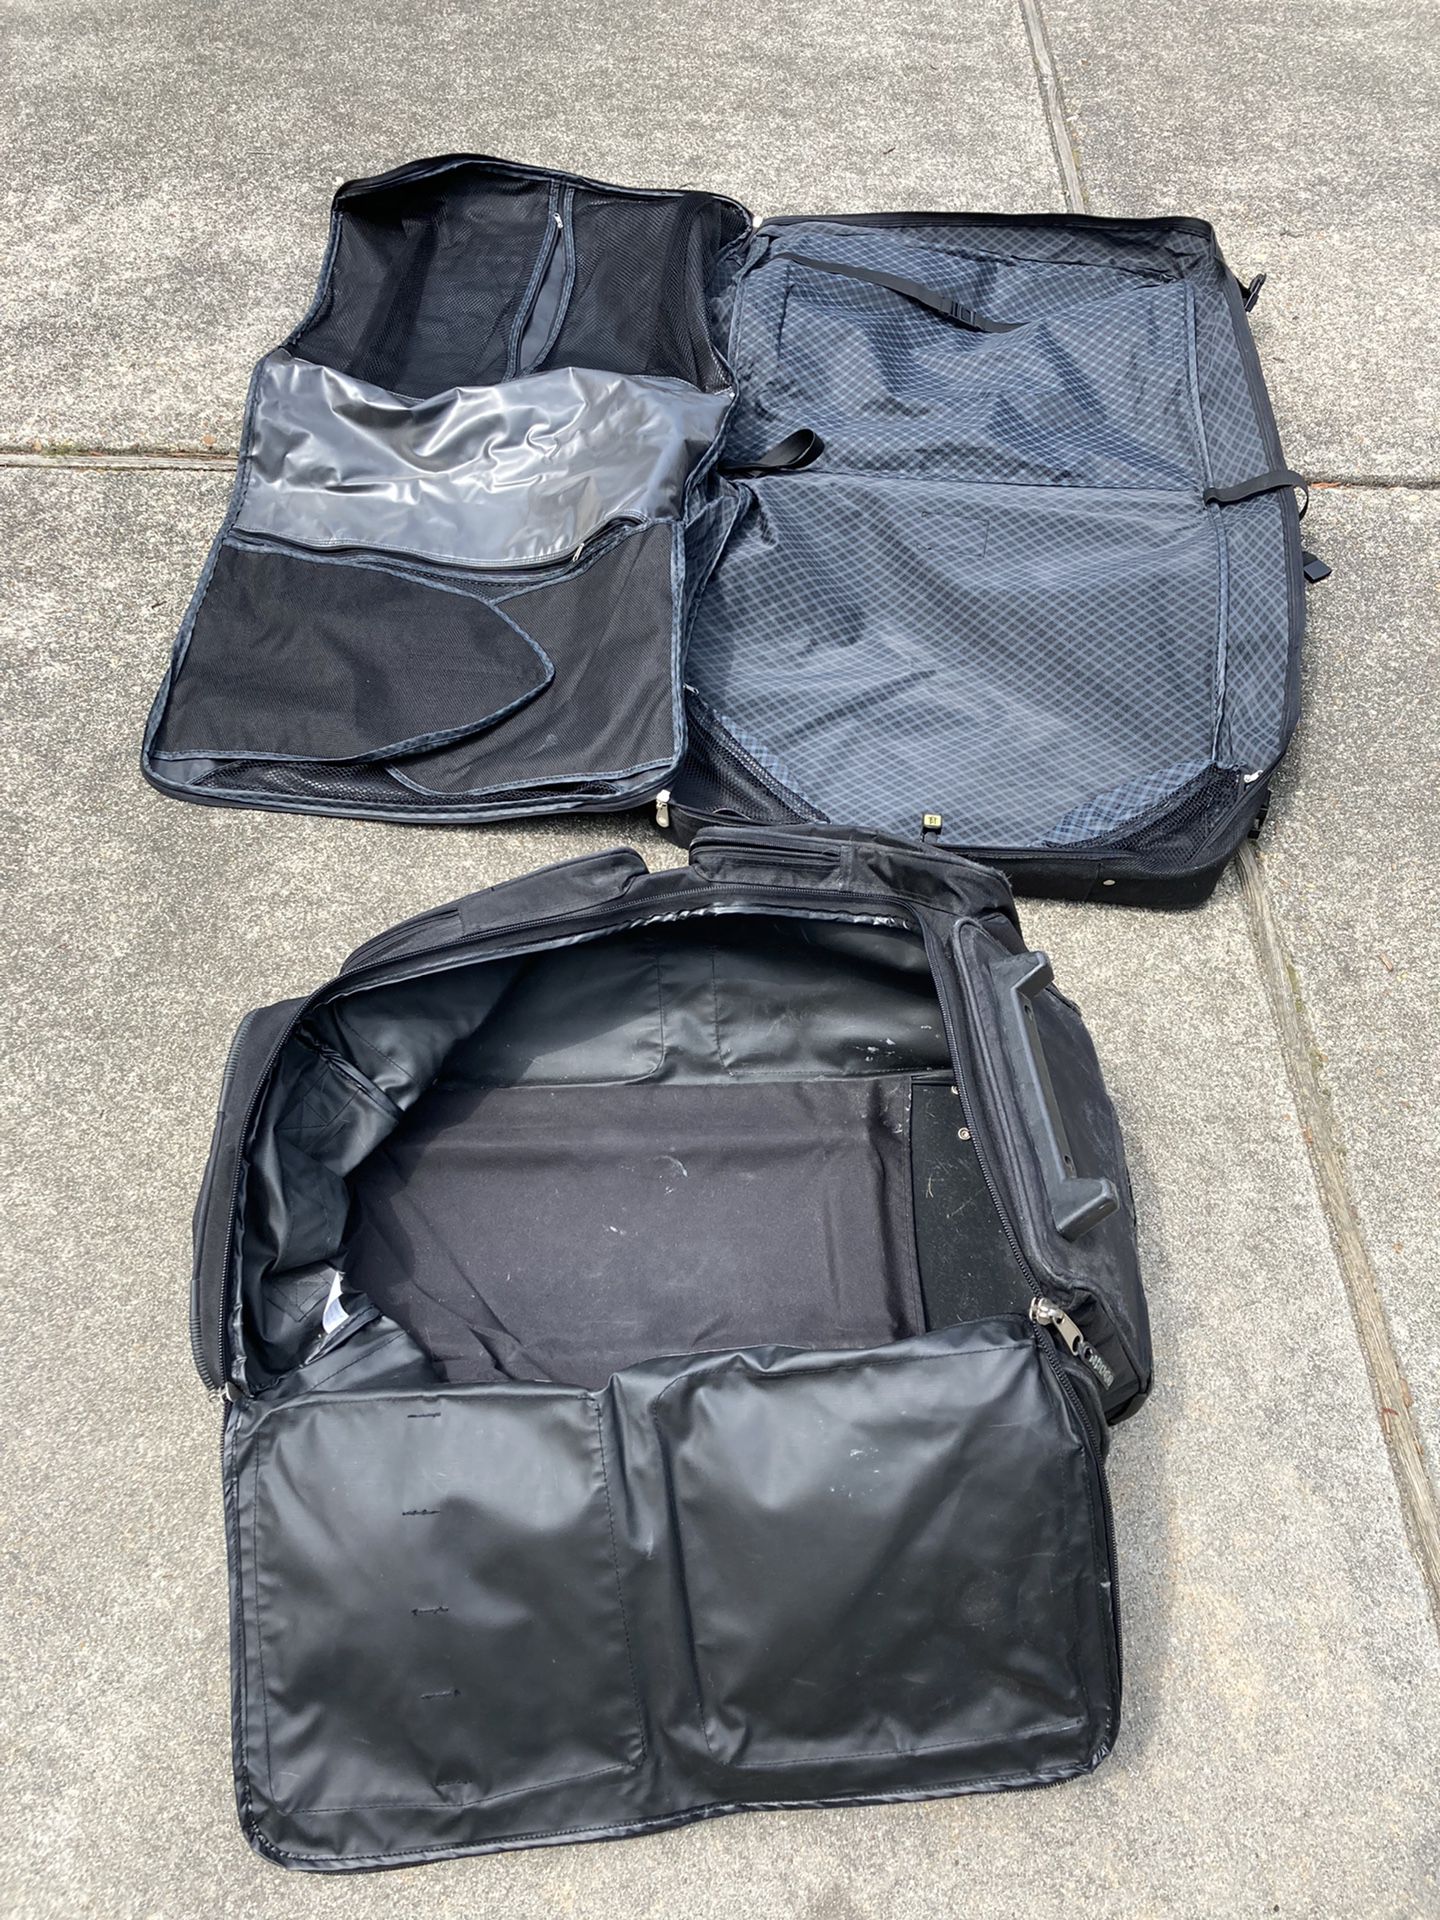 Lucas Travel Bag & Large Garment Bag